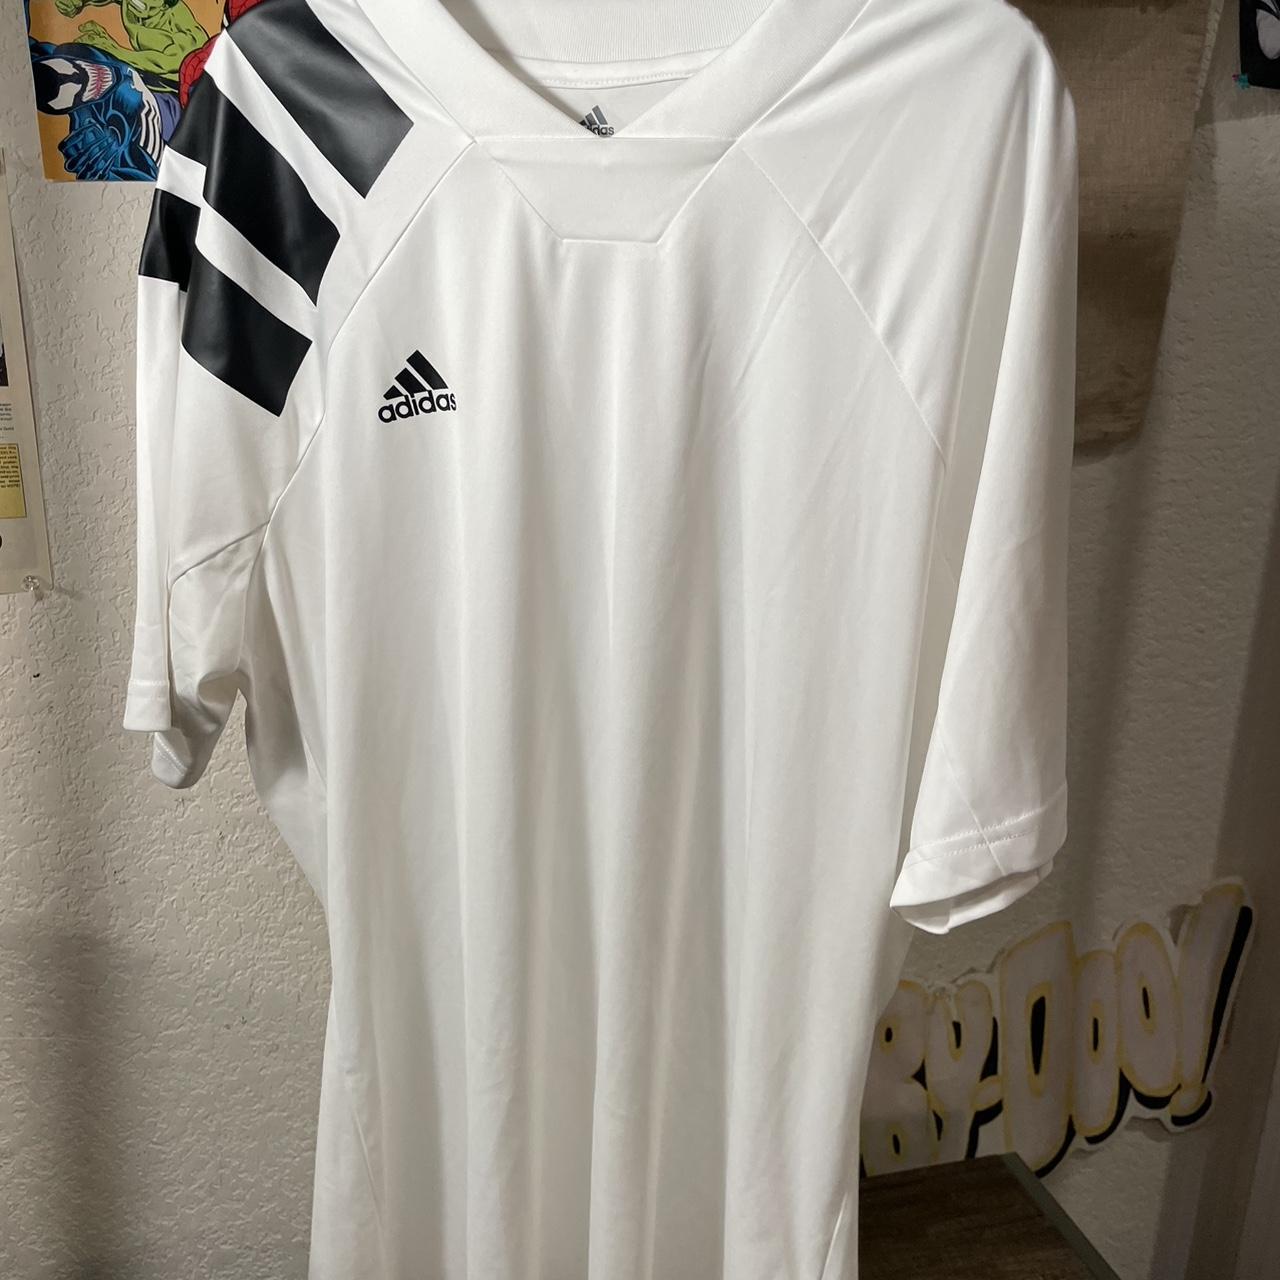 Adidas Men's Black and White T-shirt